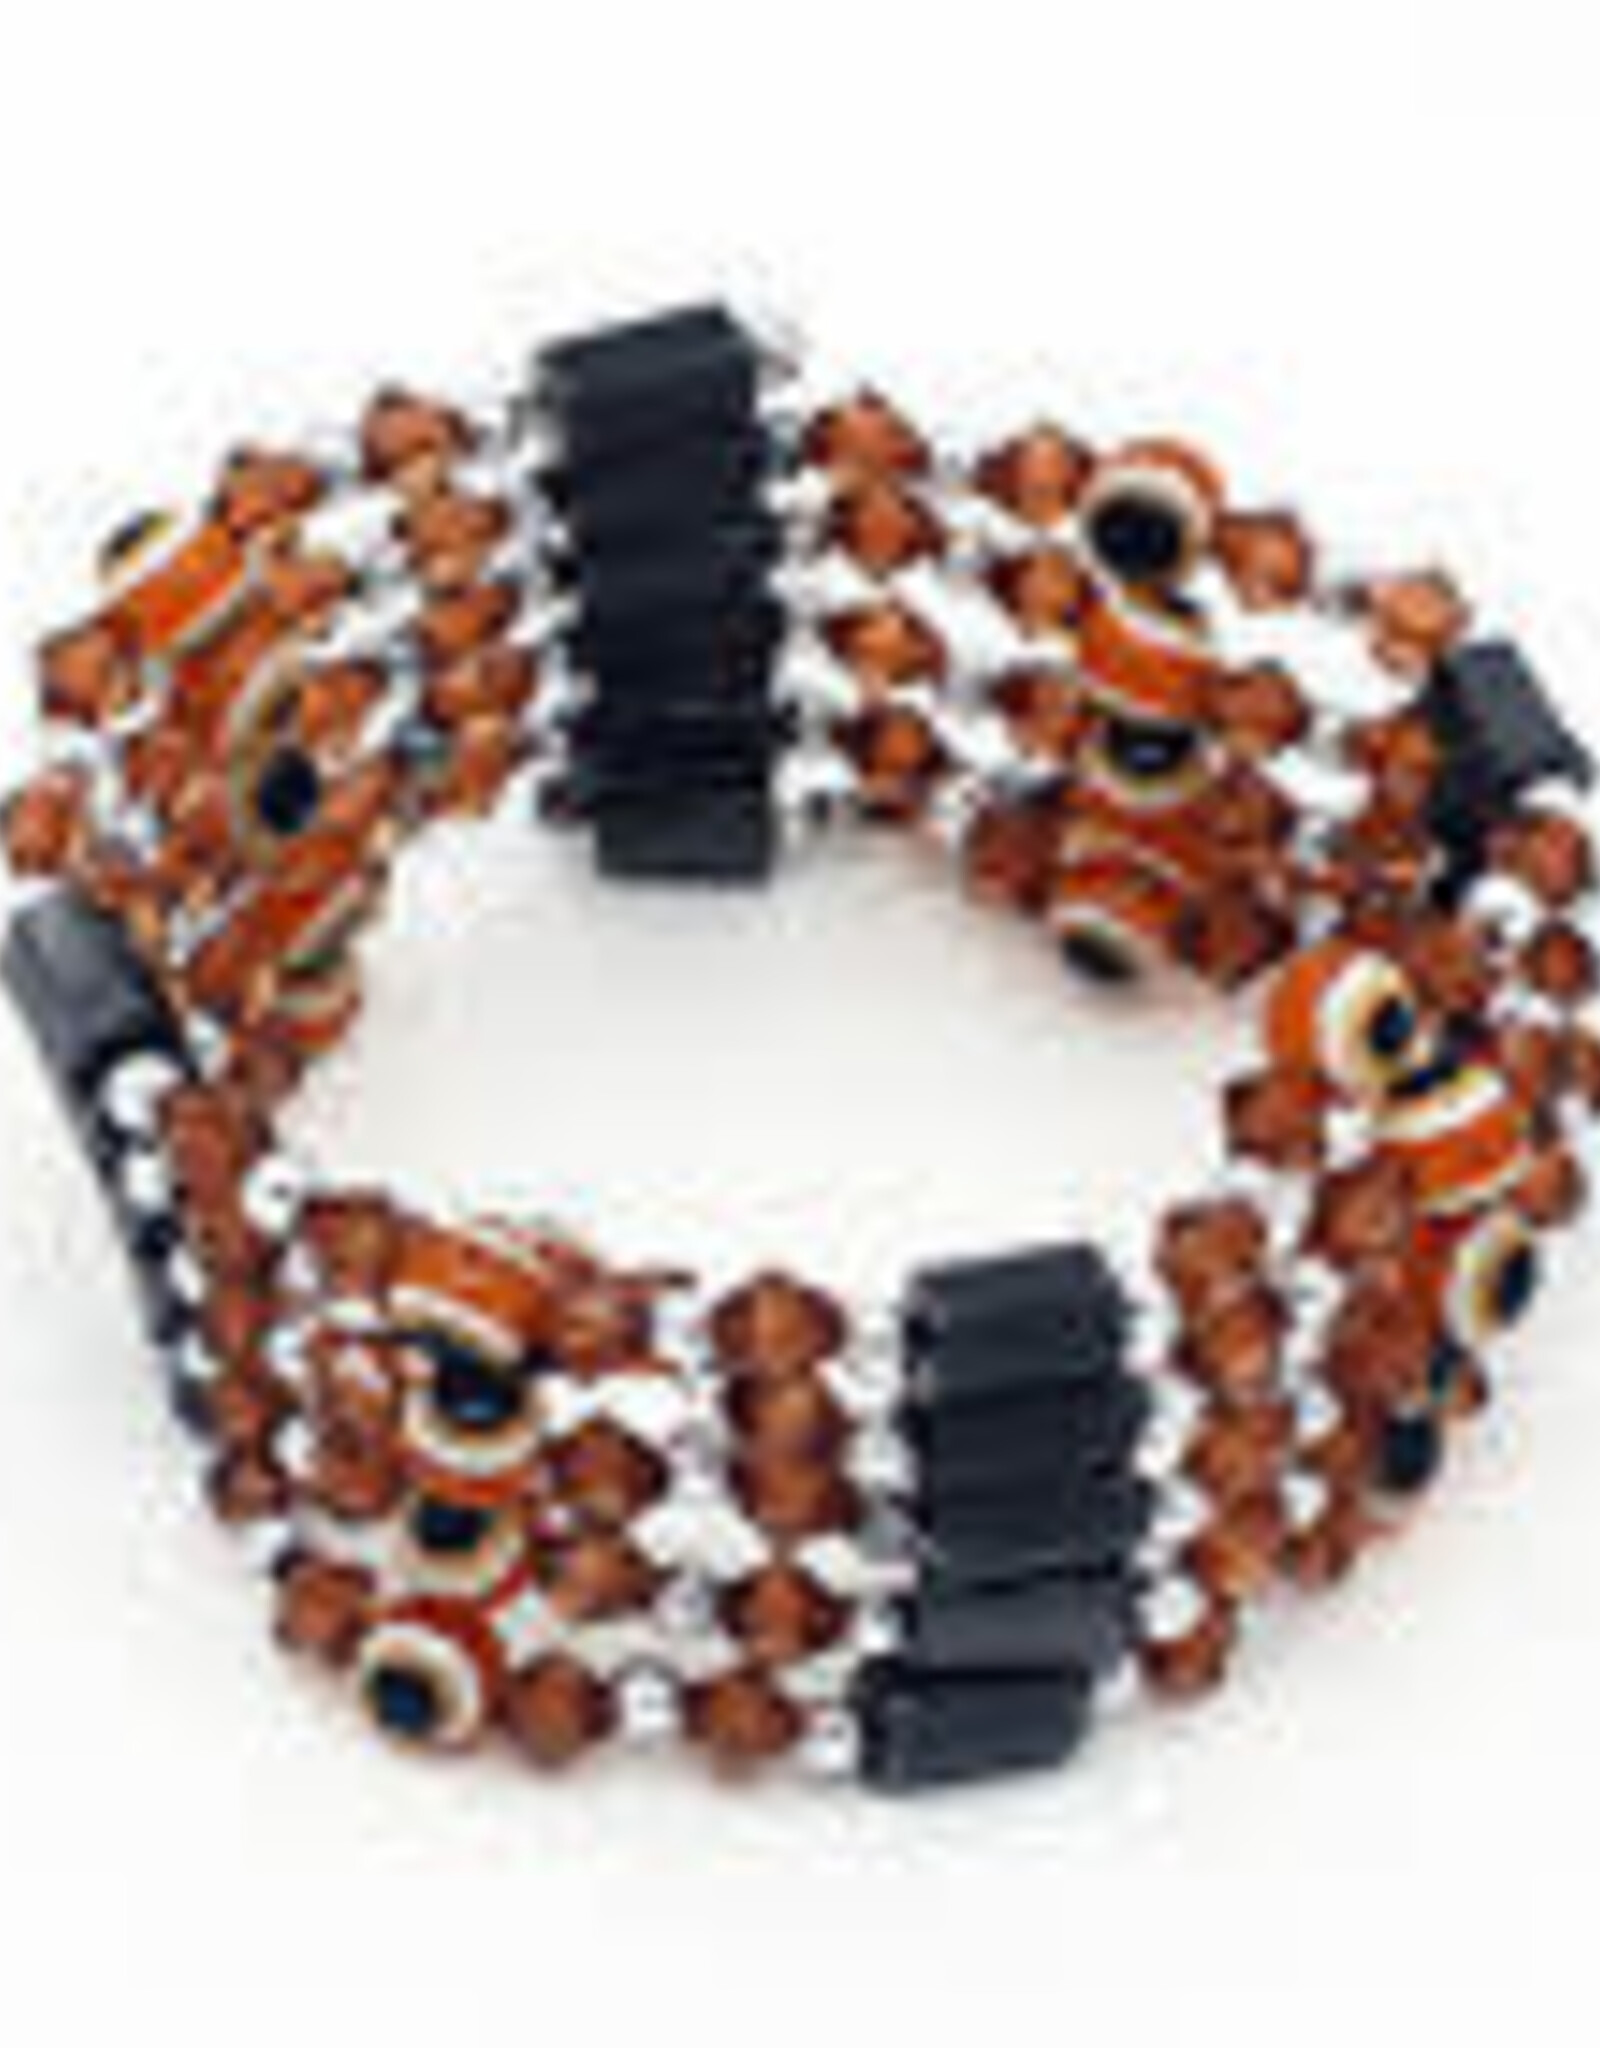 Magnetic Therapy Hematite & Evil Eye Crystal Bead Wrap Necklace/Bracelet